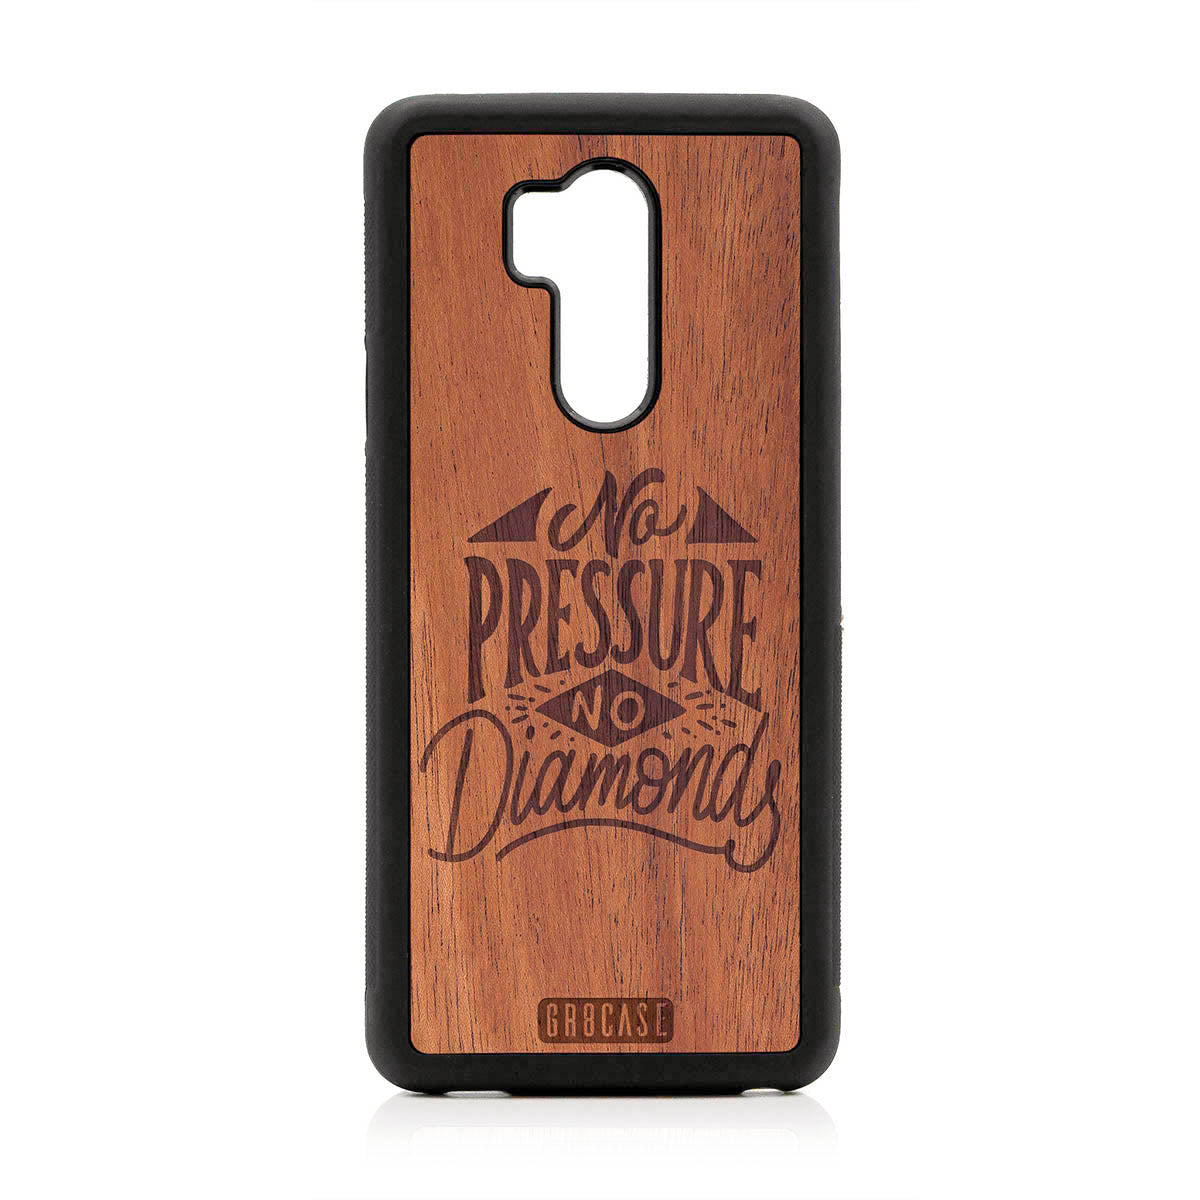 No Pressure No Diamonds Design Wood Case For LG G7 ThinQ